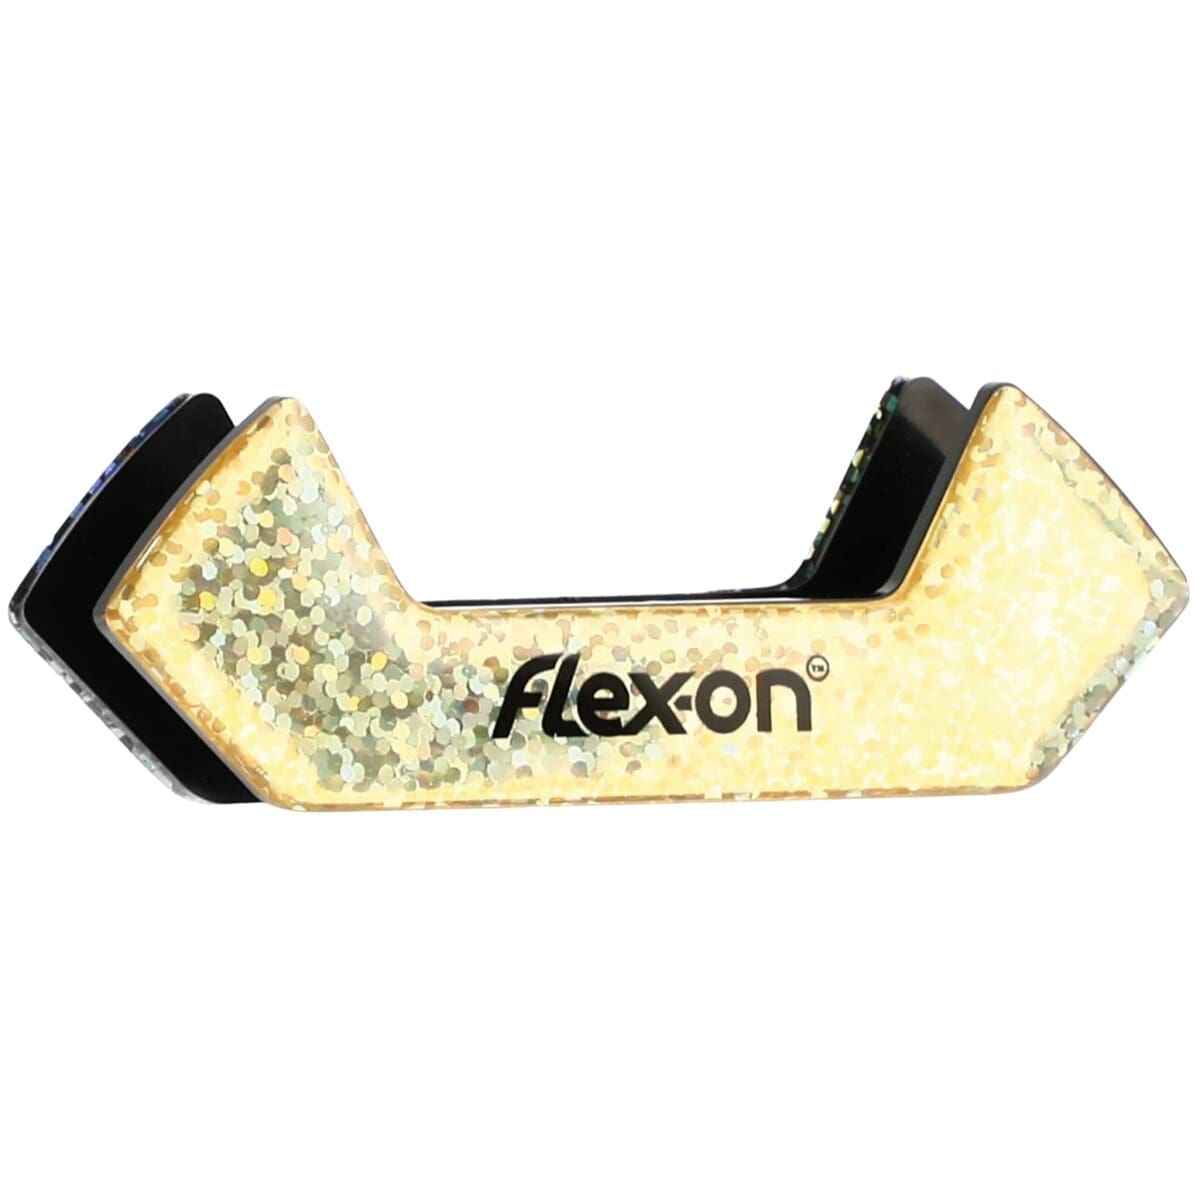 Flex-On Magnetic Sticker Gold Glitter